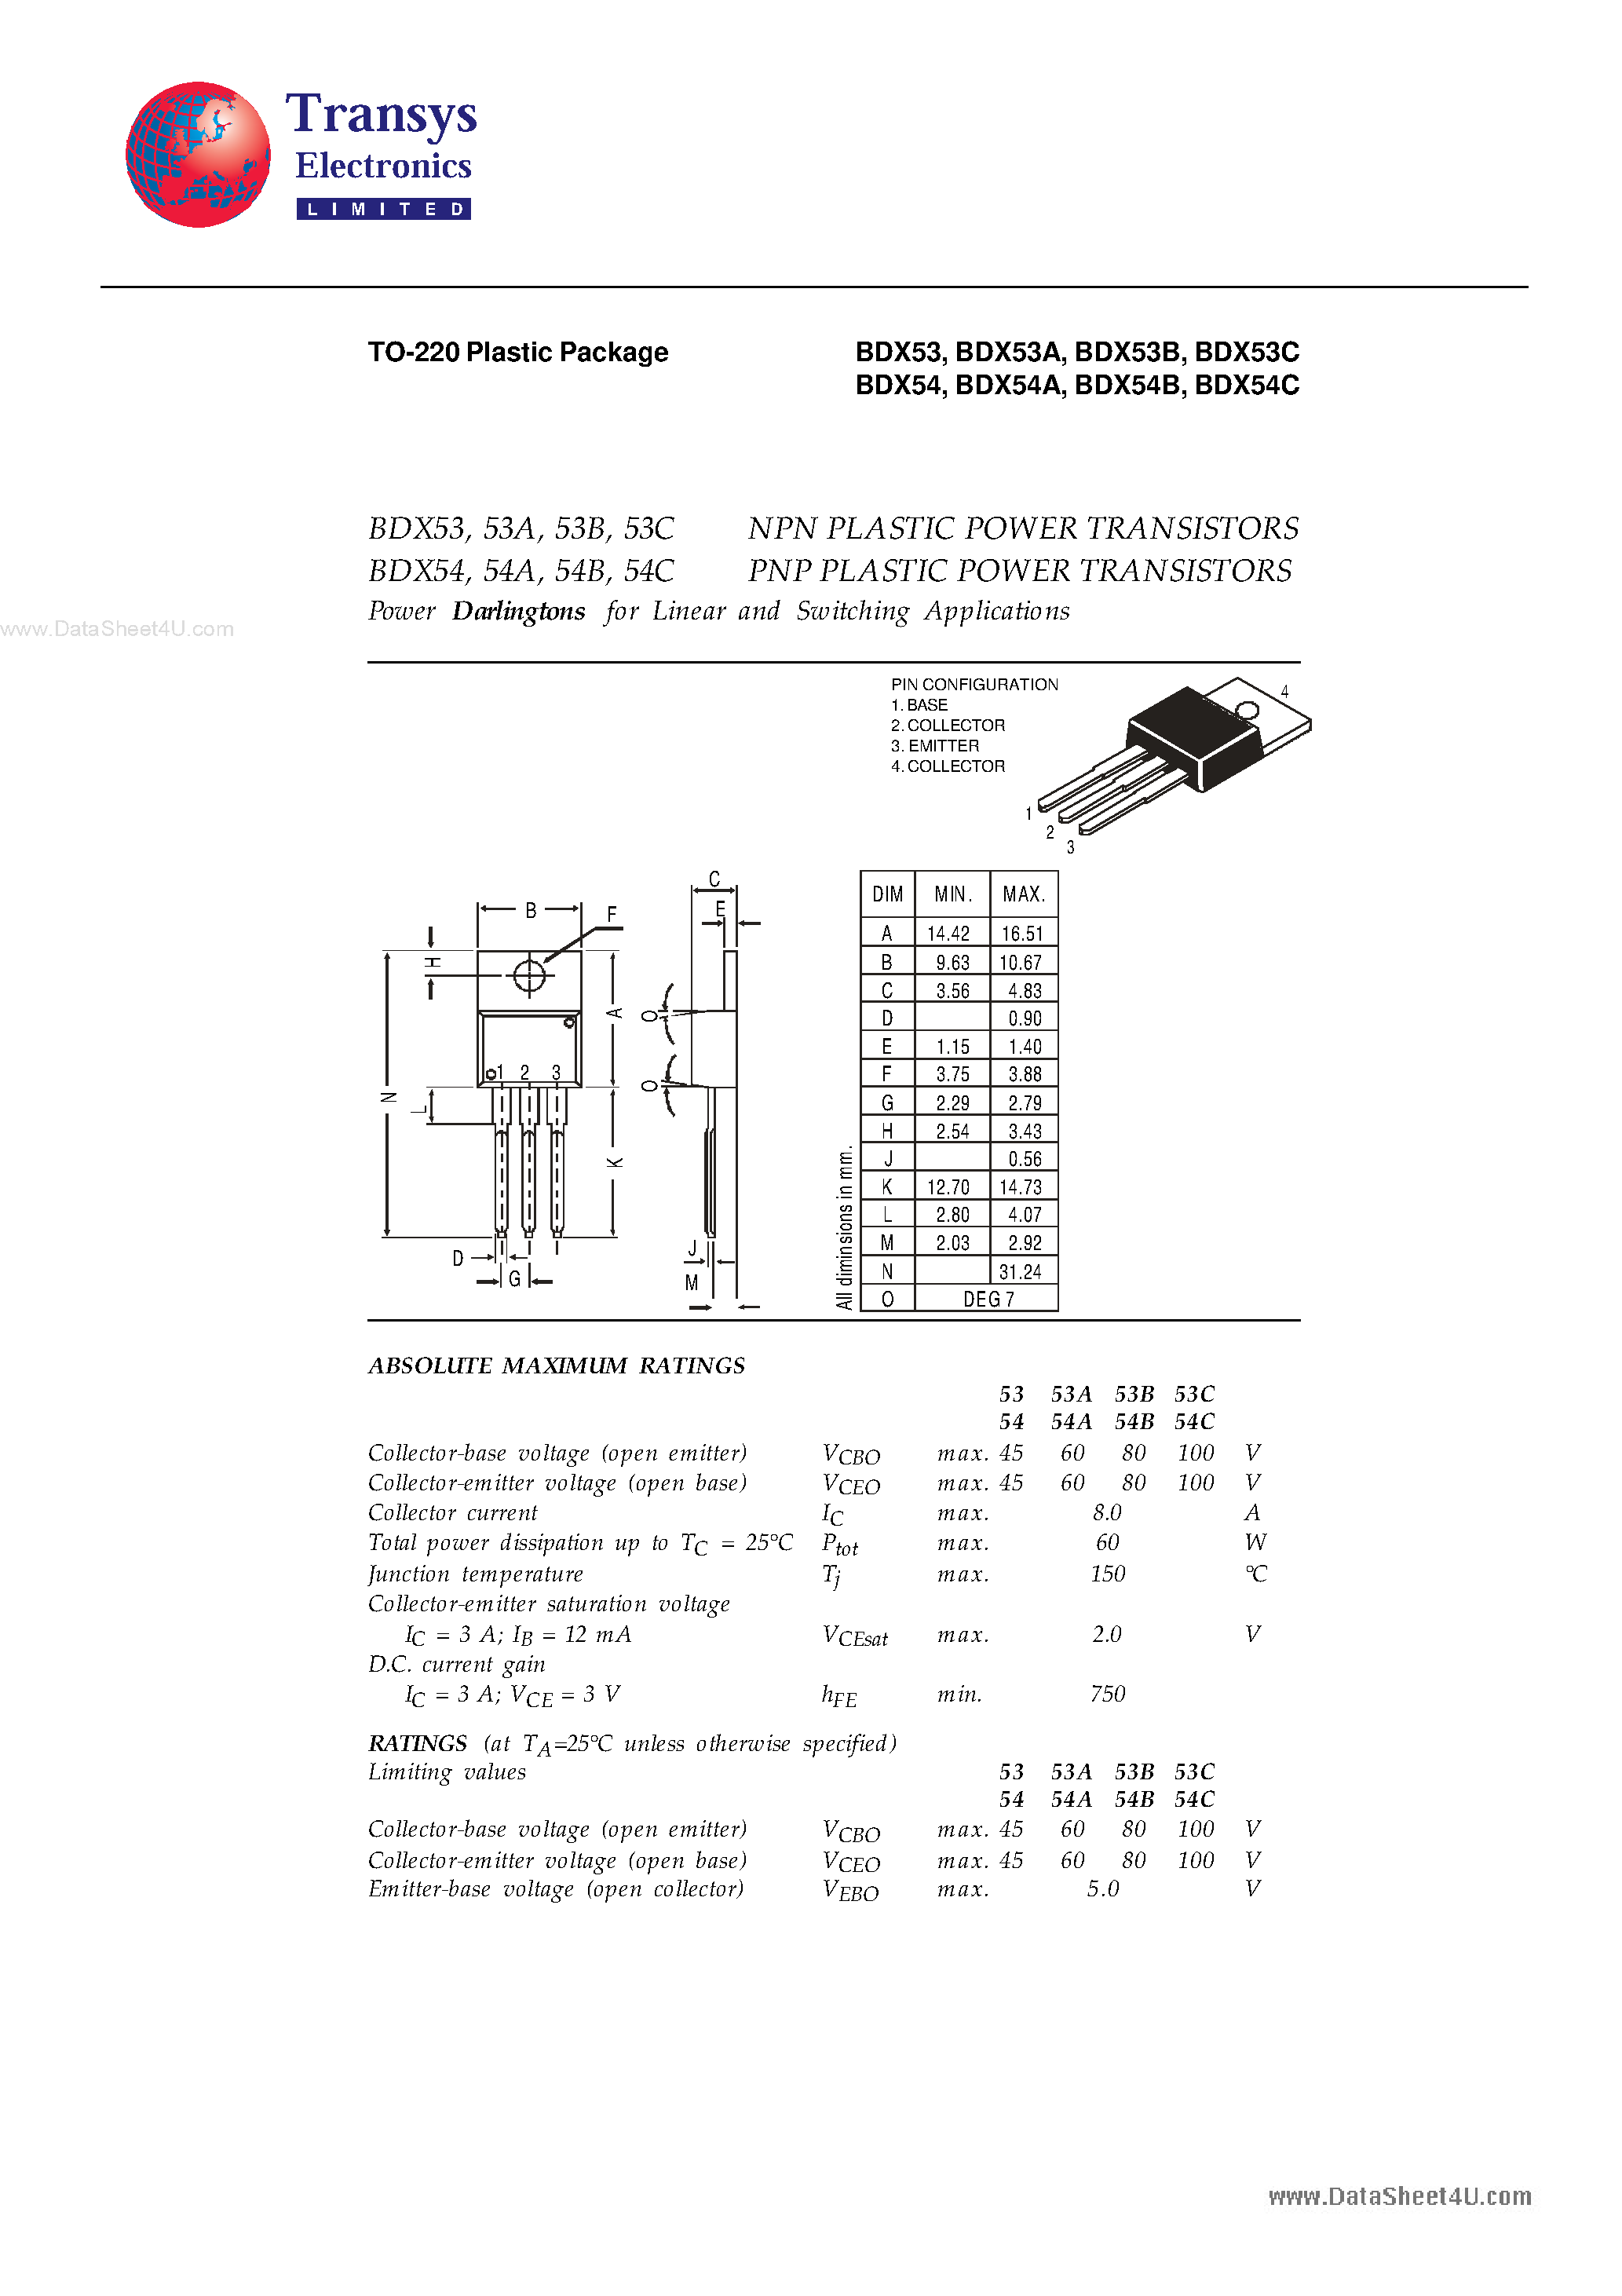 Datasheet BDX53 - (BDX5xx) NPN PLASTIC POWER TRANSISTORS page 1